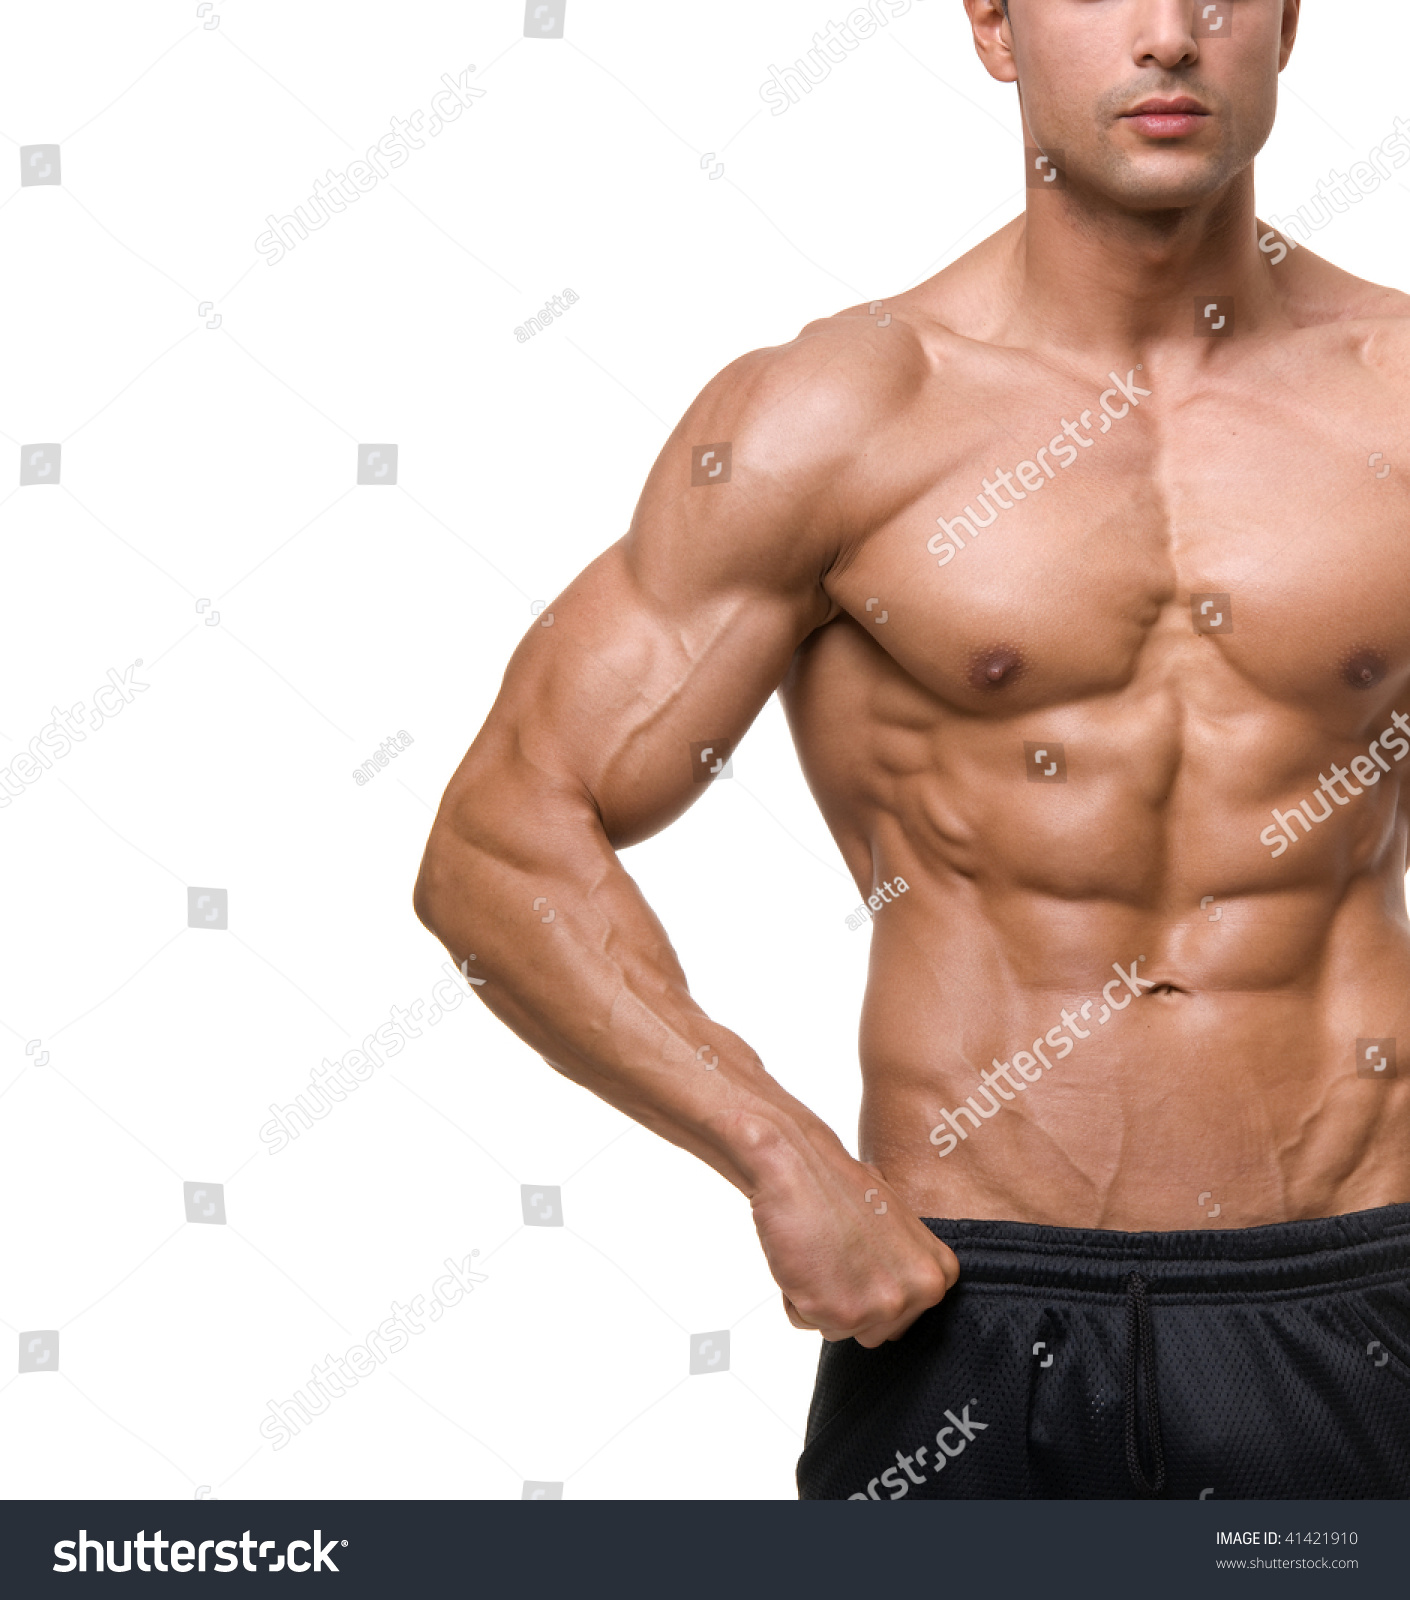 Bodybuilding man Stock Photo 01 free download